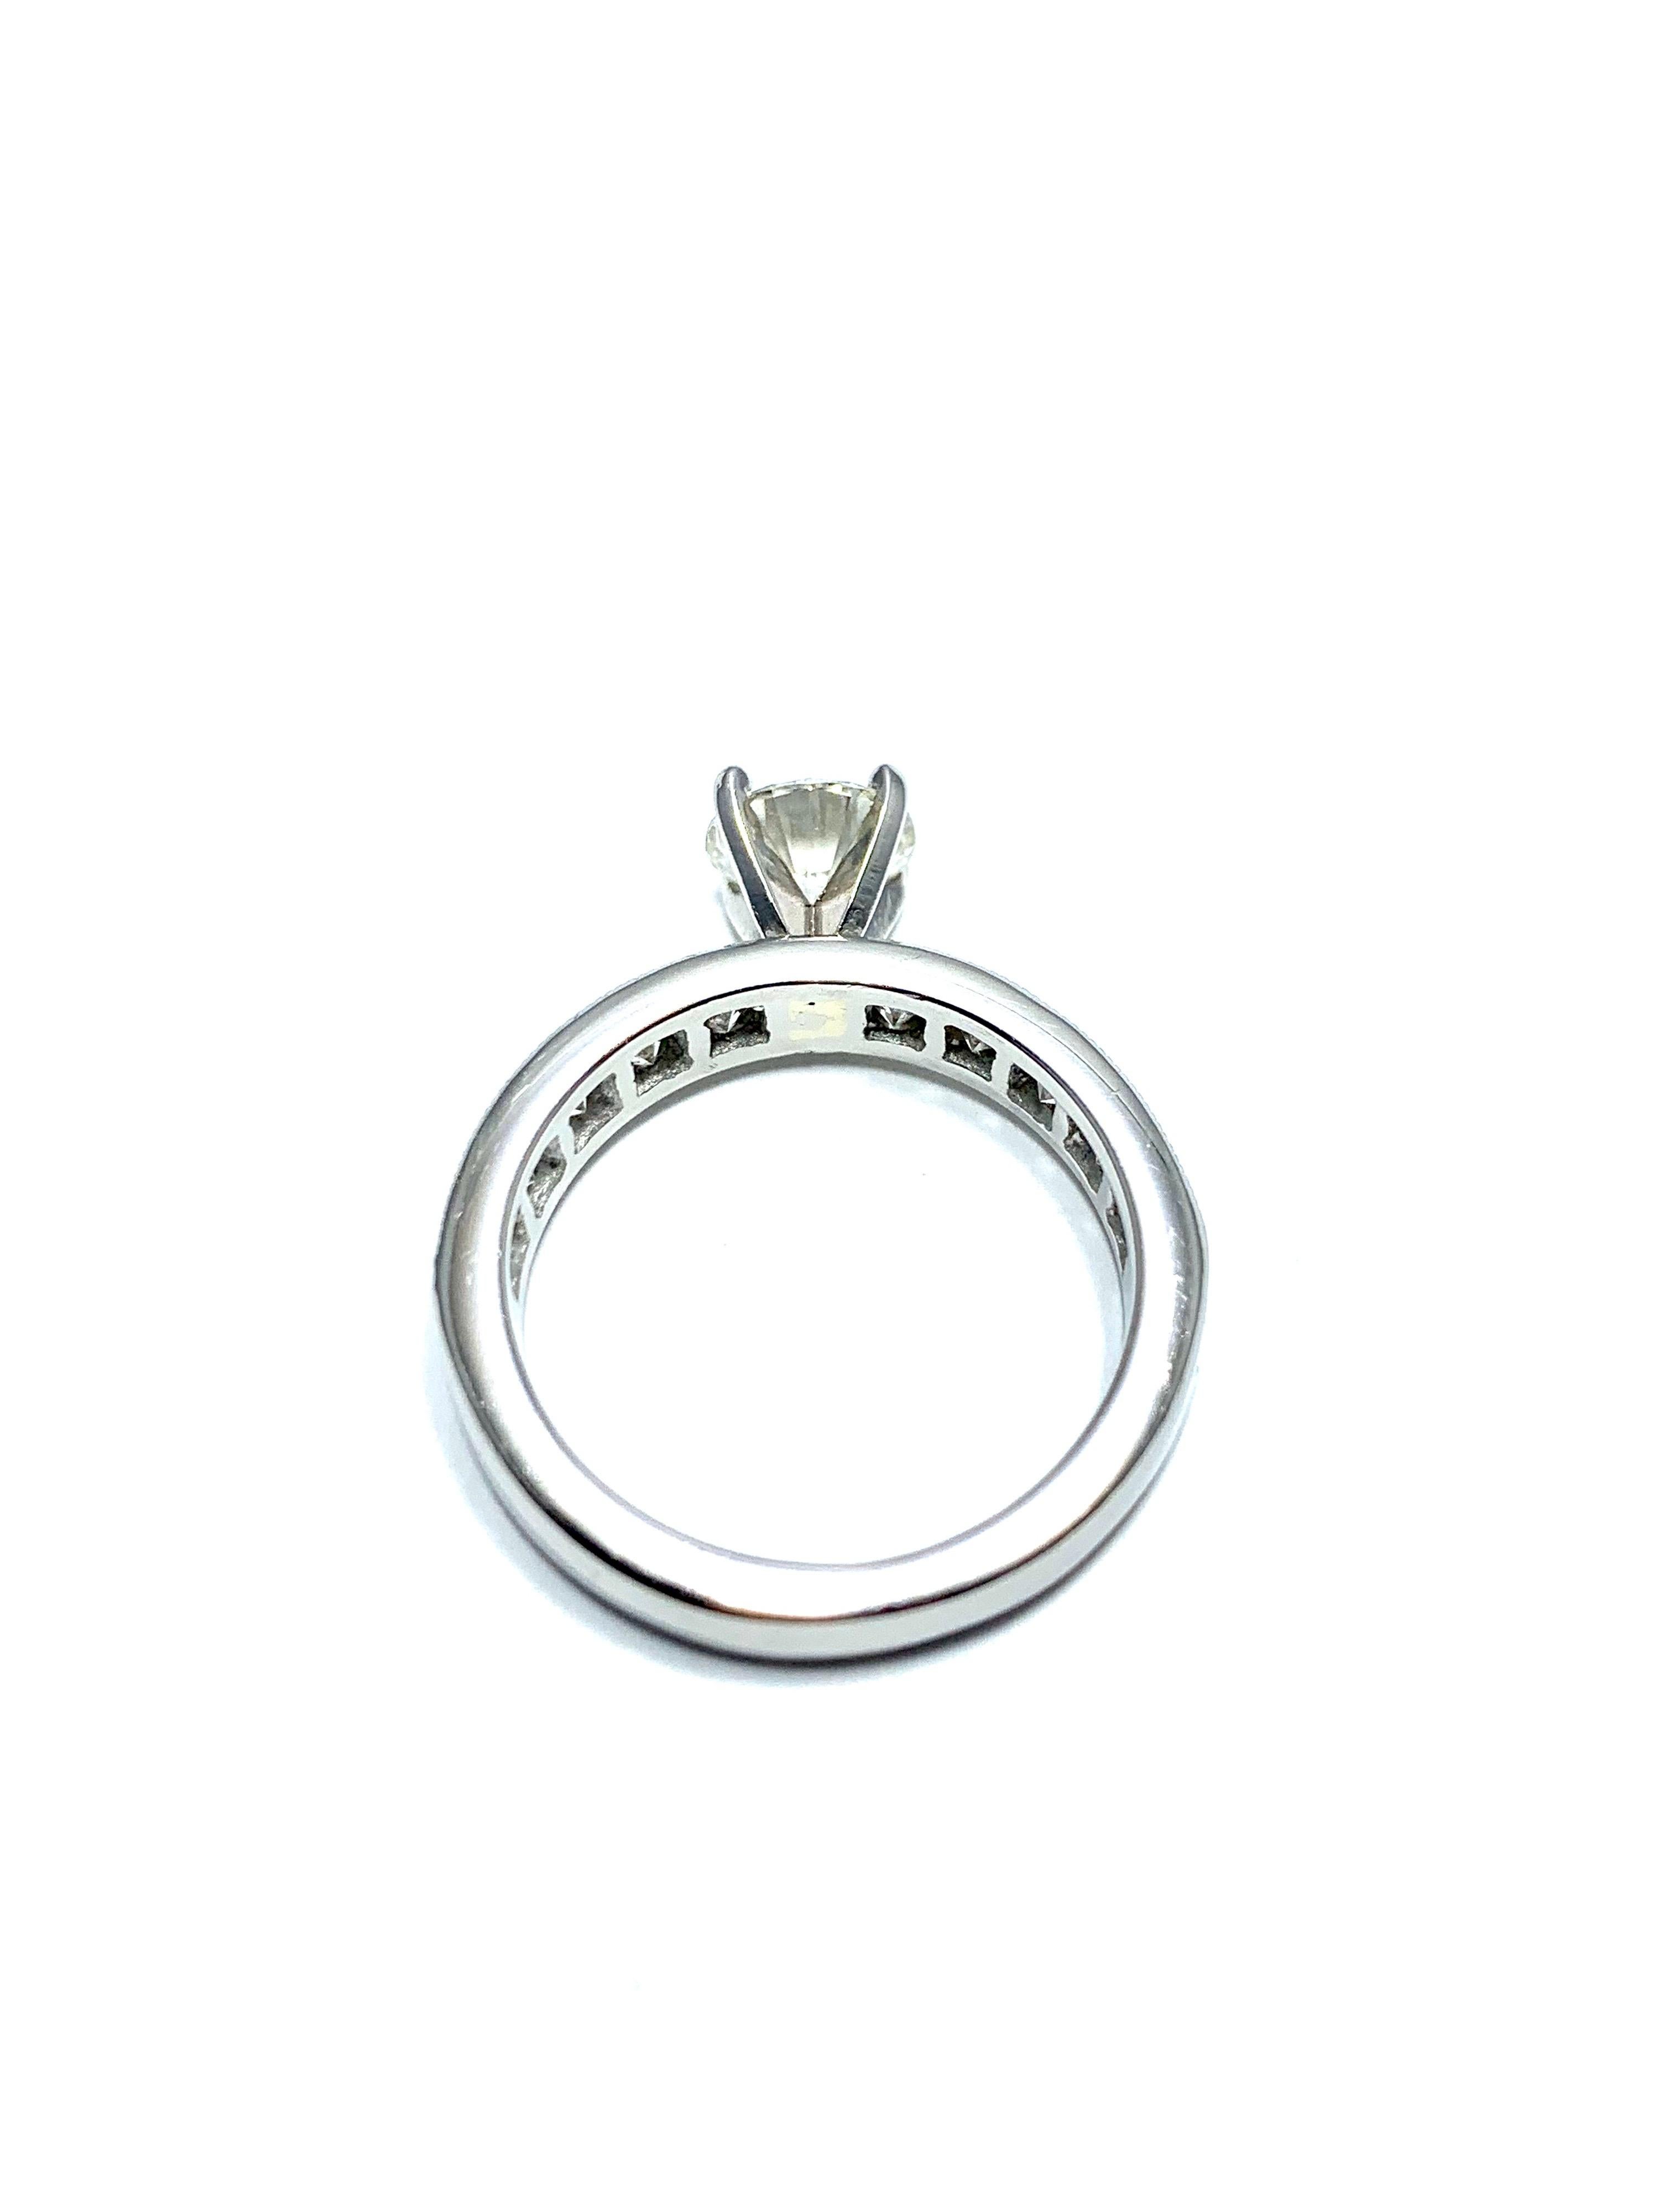 Modern 1.01 Carat Round Brilliant Cut Diamond and Platinum Engagement Ring